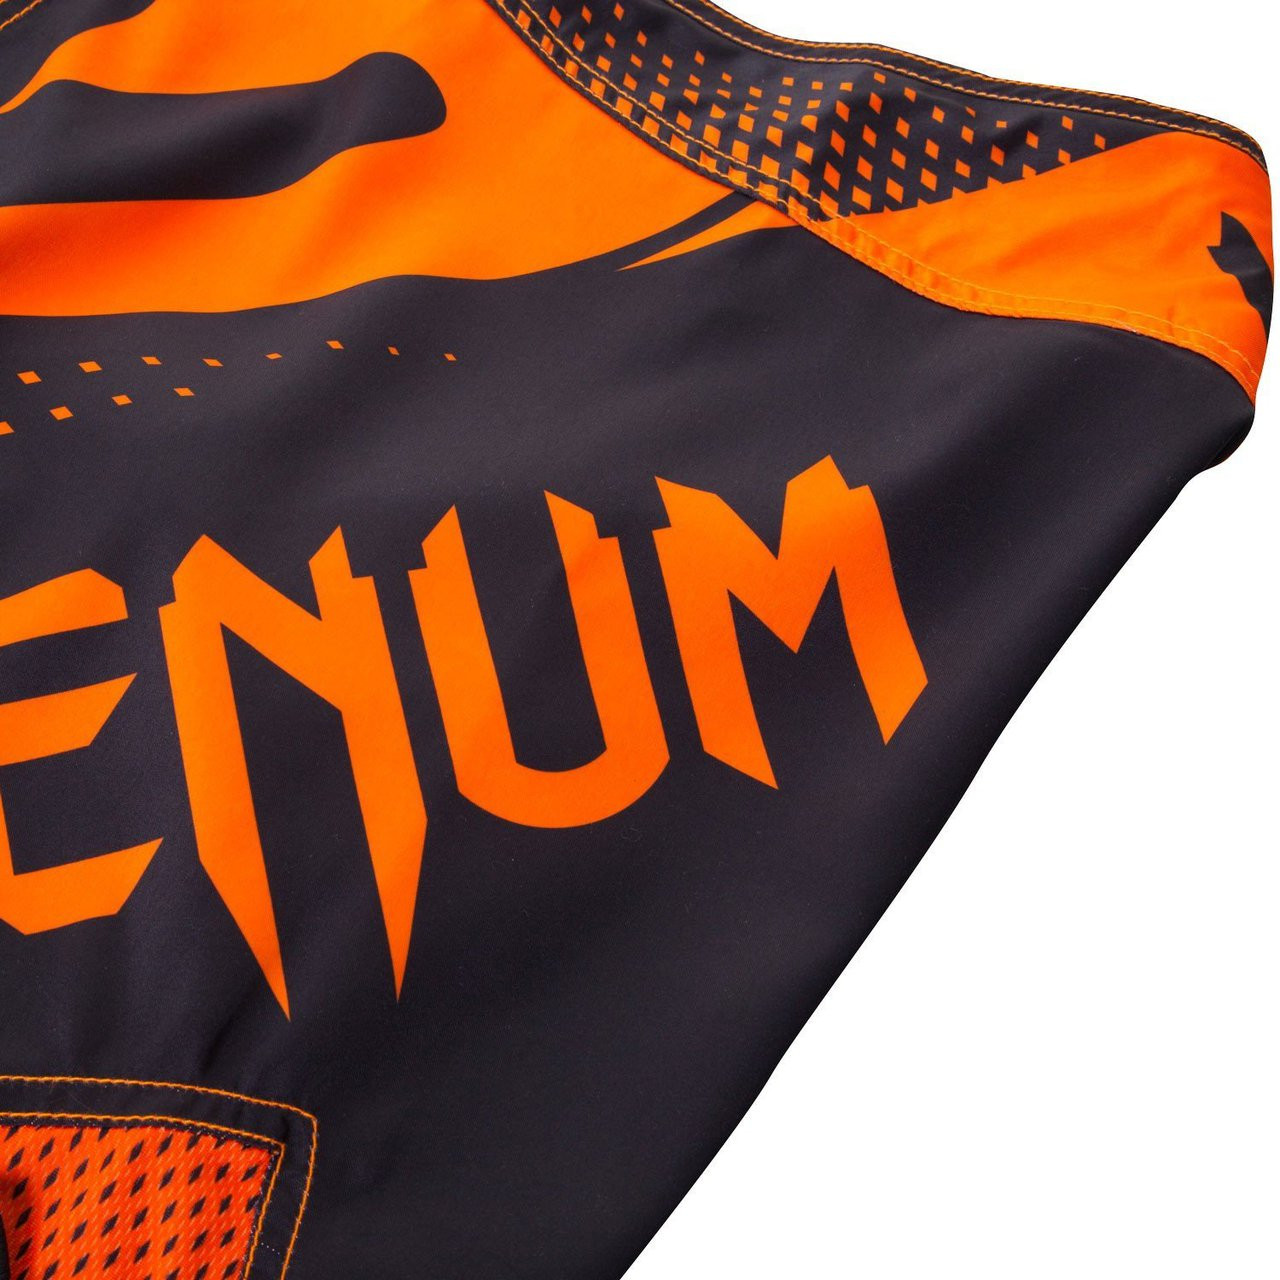 Venum Hurricane Fight Shorts - Black/ Neon Orange - The Jiu Jitsu Shop